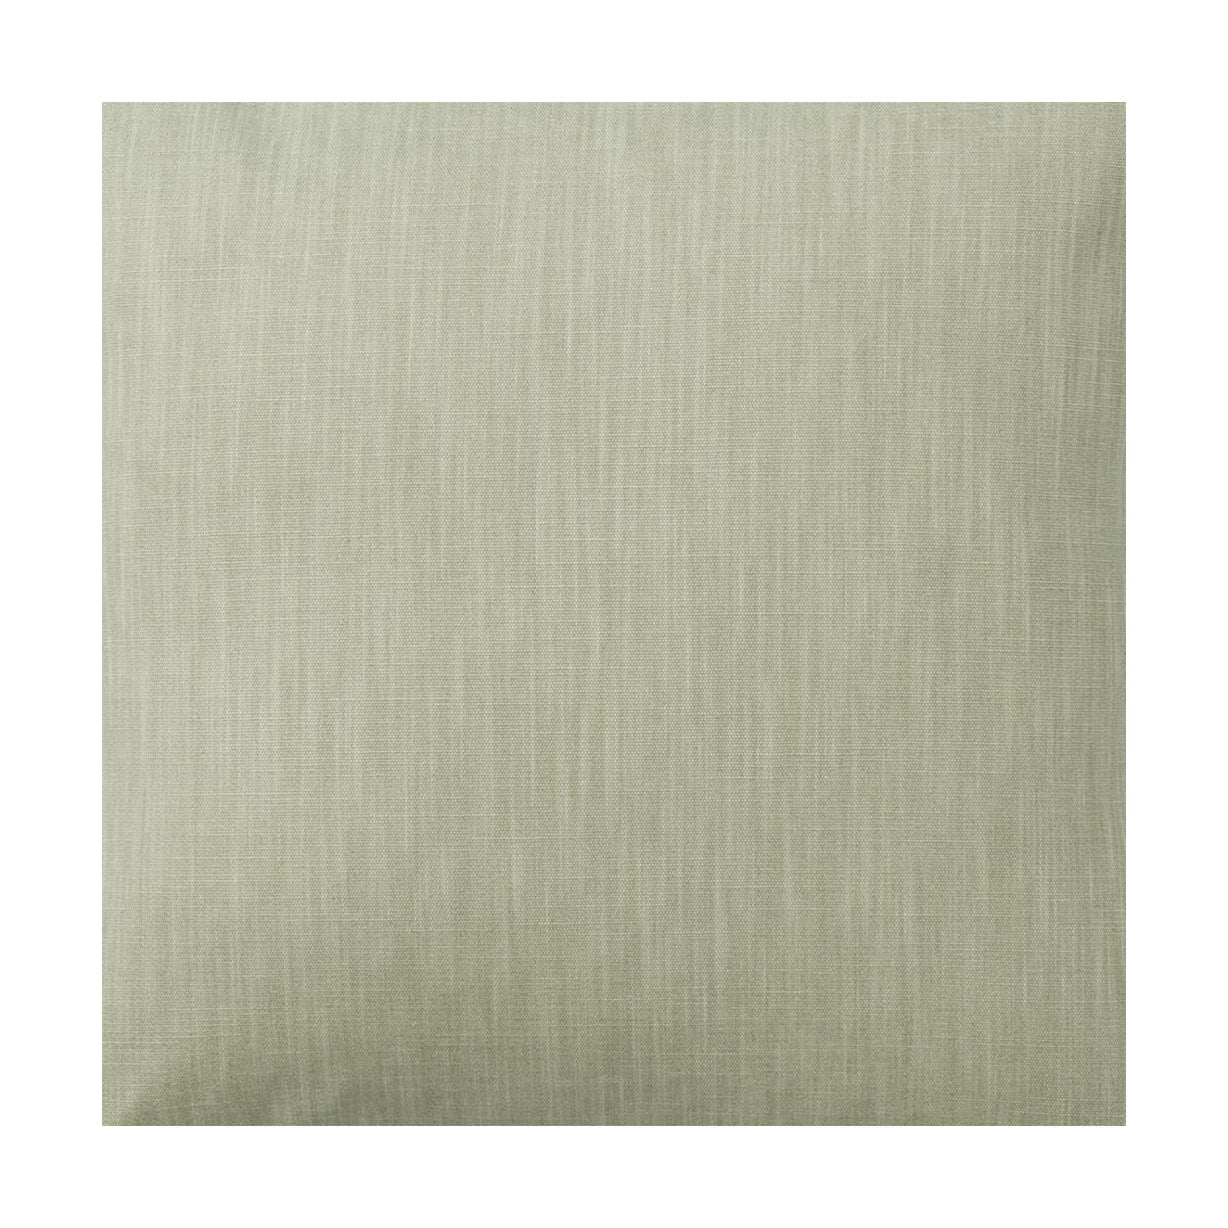 Spira Klotz -stofbreedte 150 cm (prijs per meter), stoffig groen